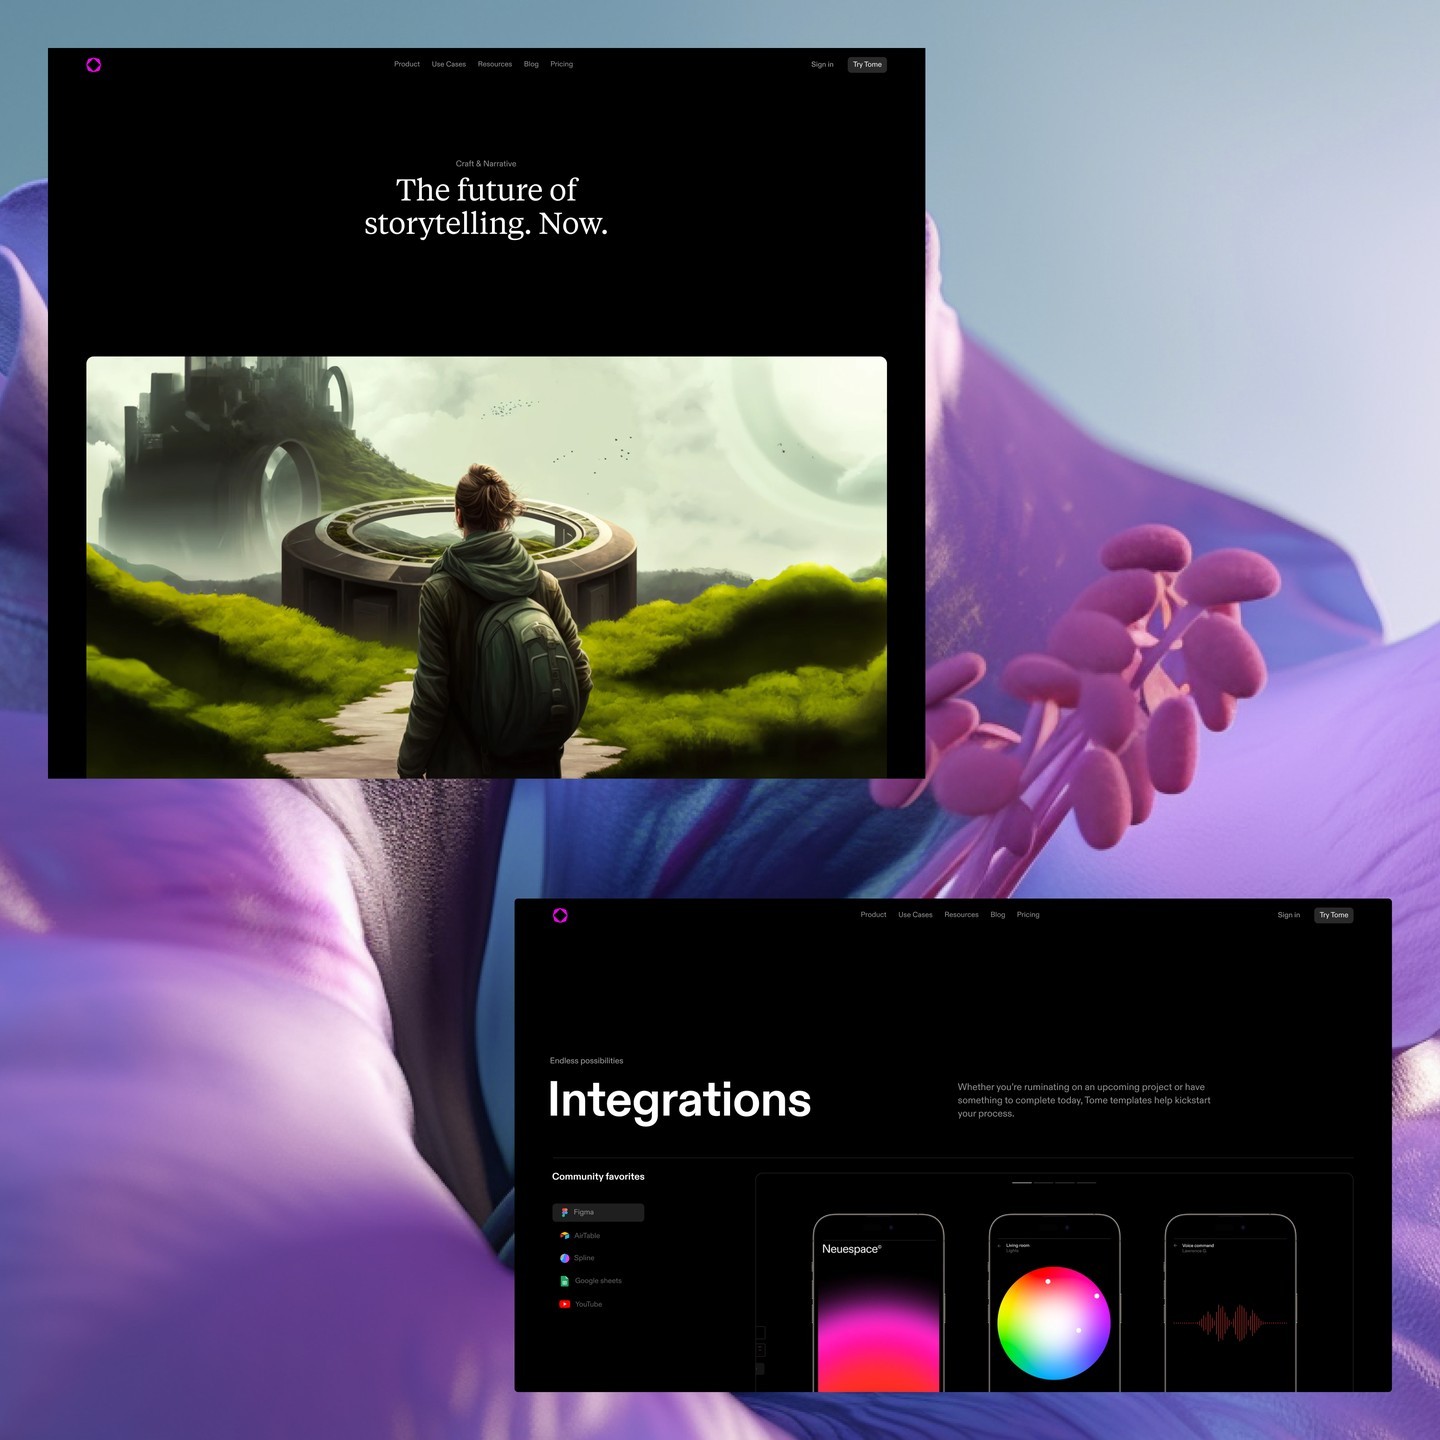 Tome product desktop images against purple background